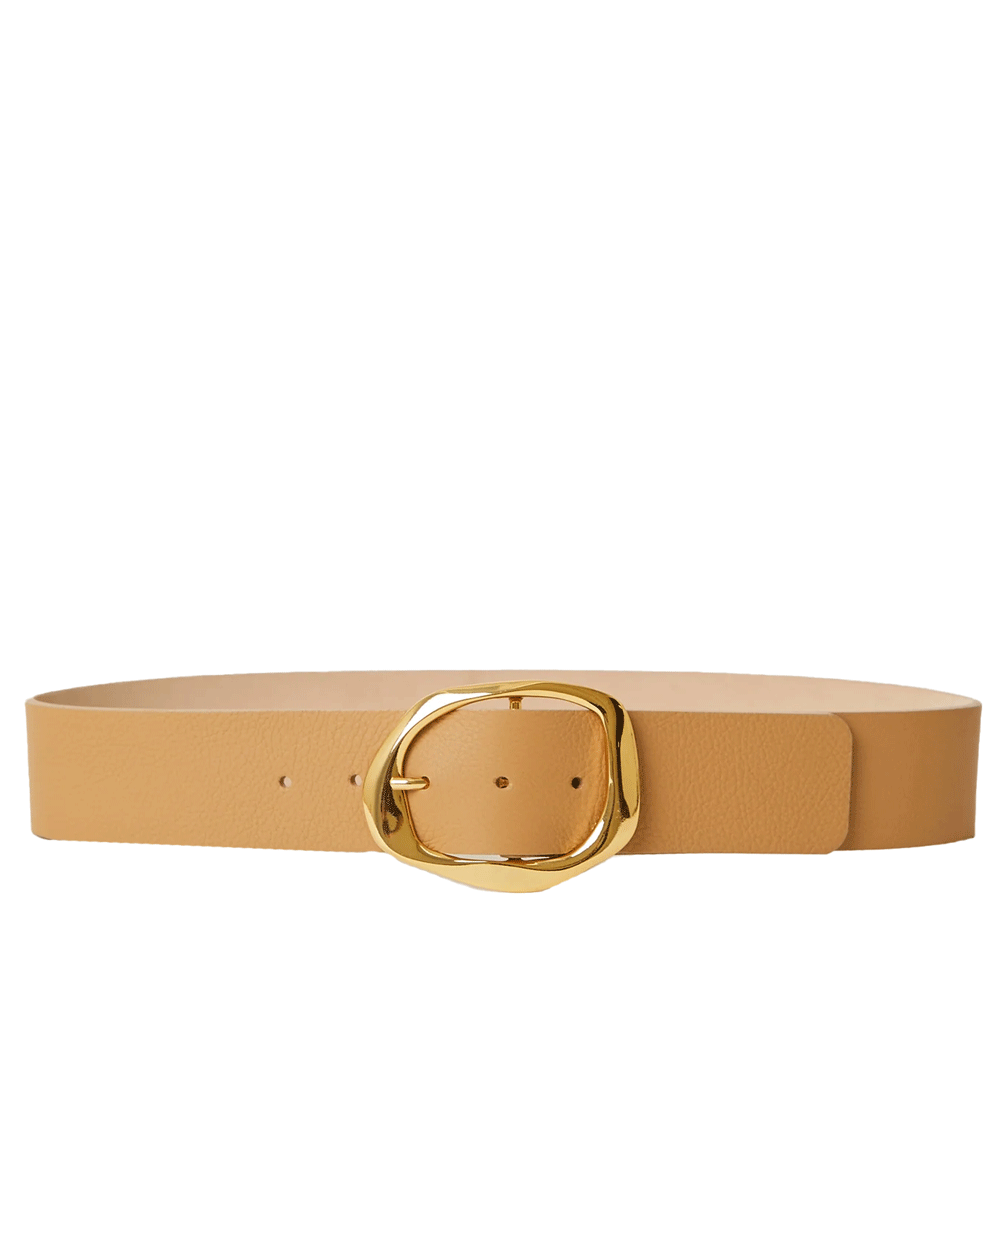 Edmond Leather Belt in Vachetta and Gold